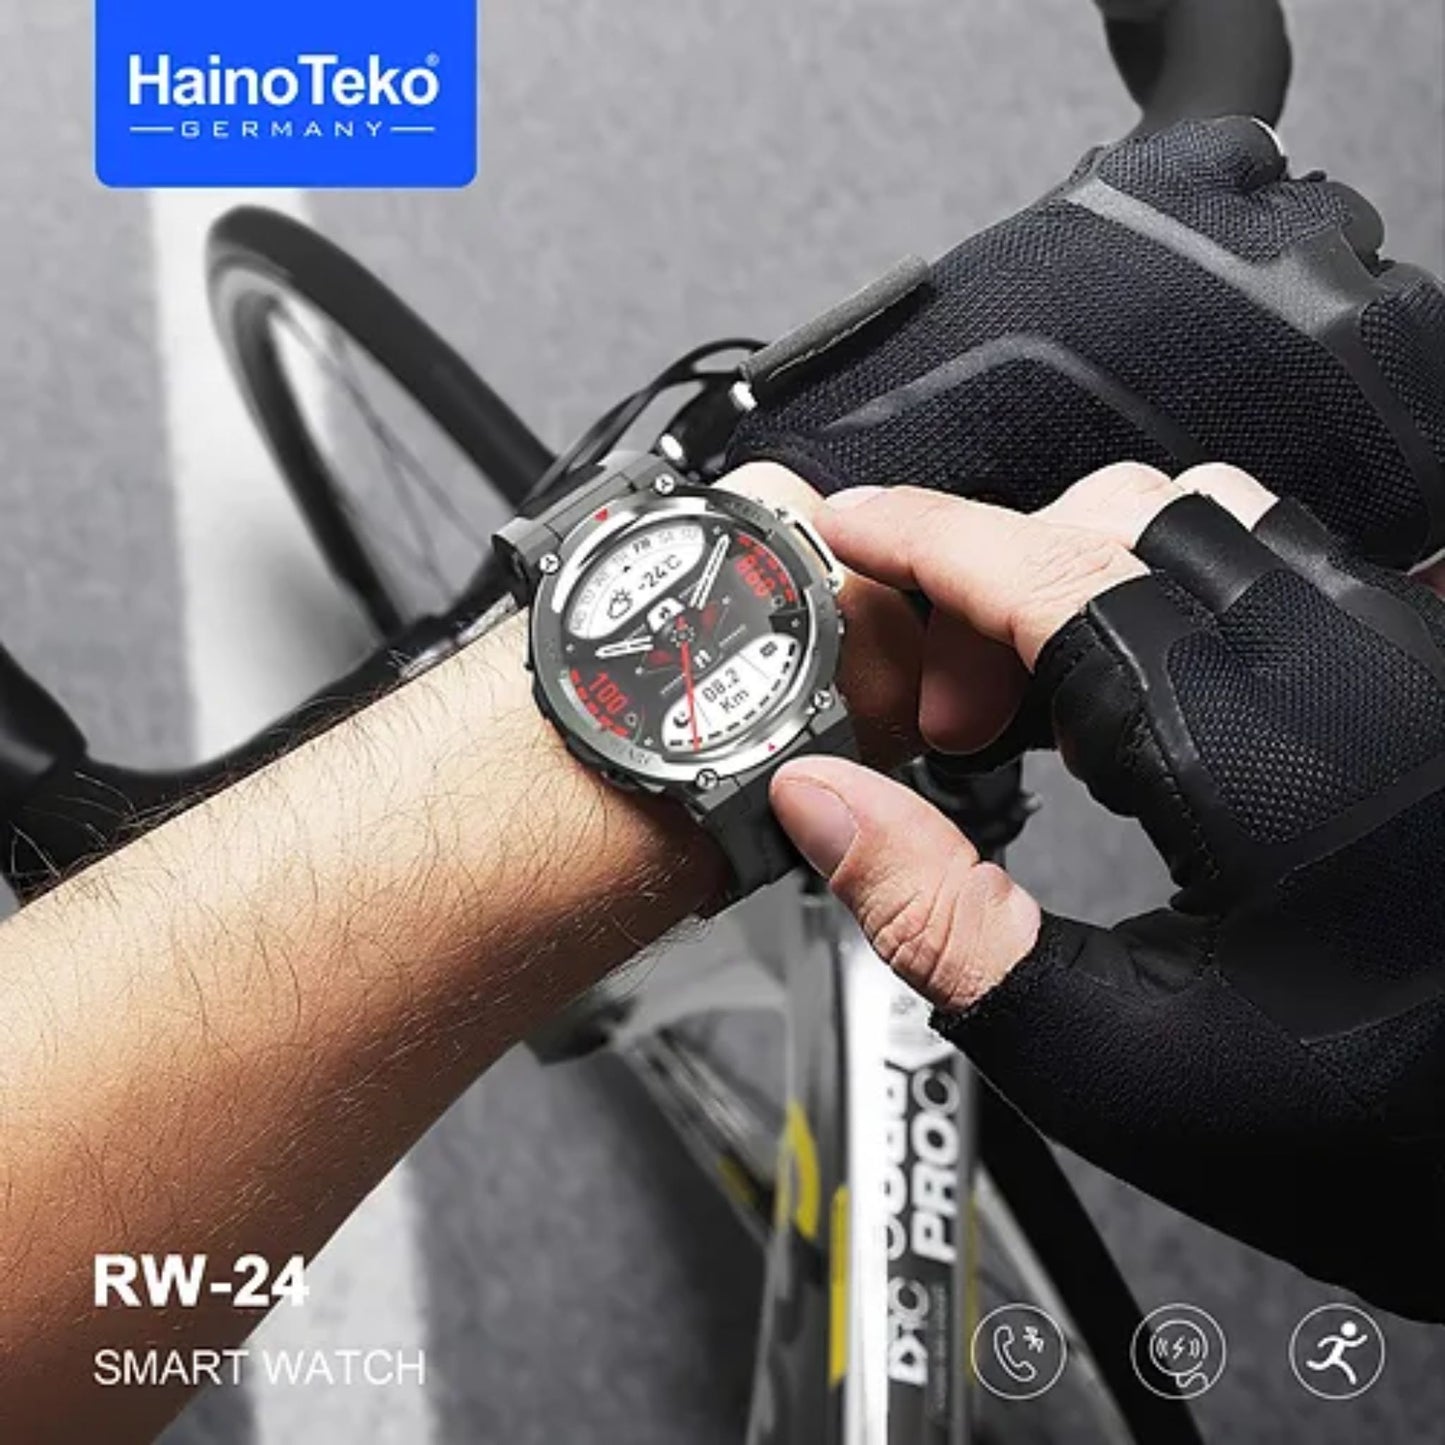 Premium Haino Teko Germany Sports Smart Watch RW-24 with Bluetooth Call-Green